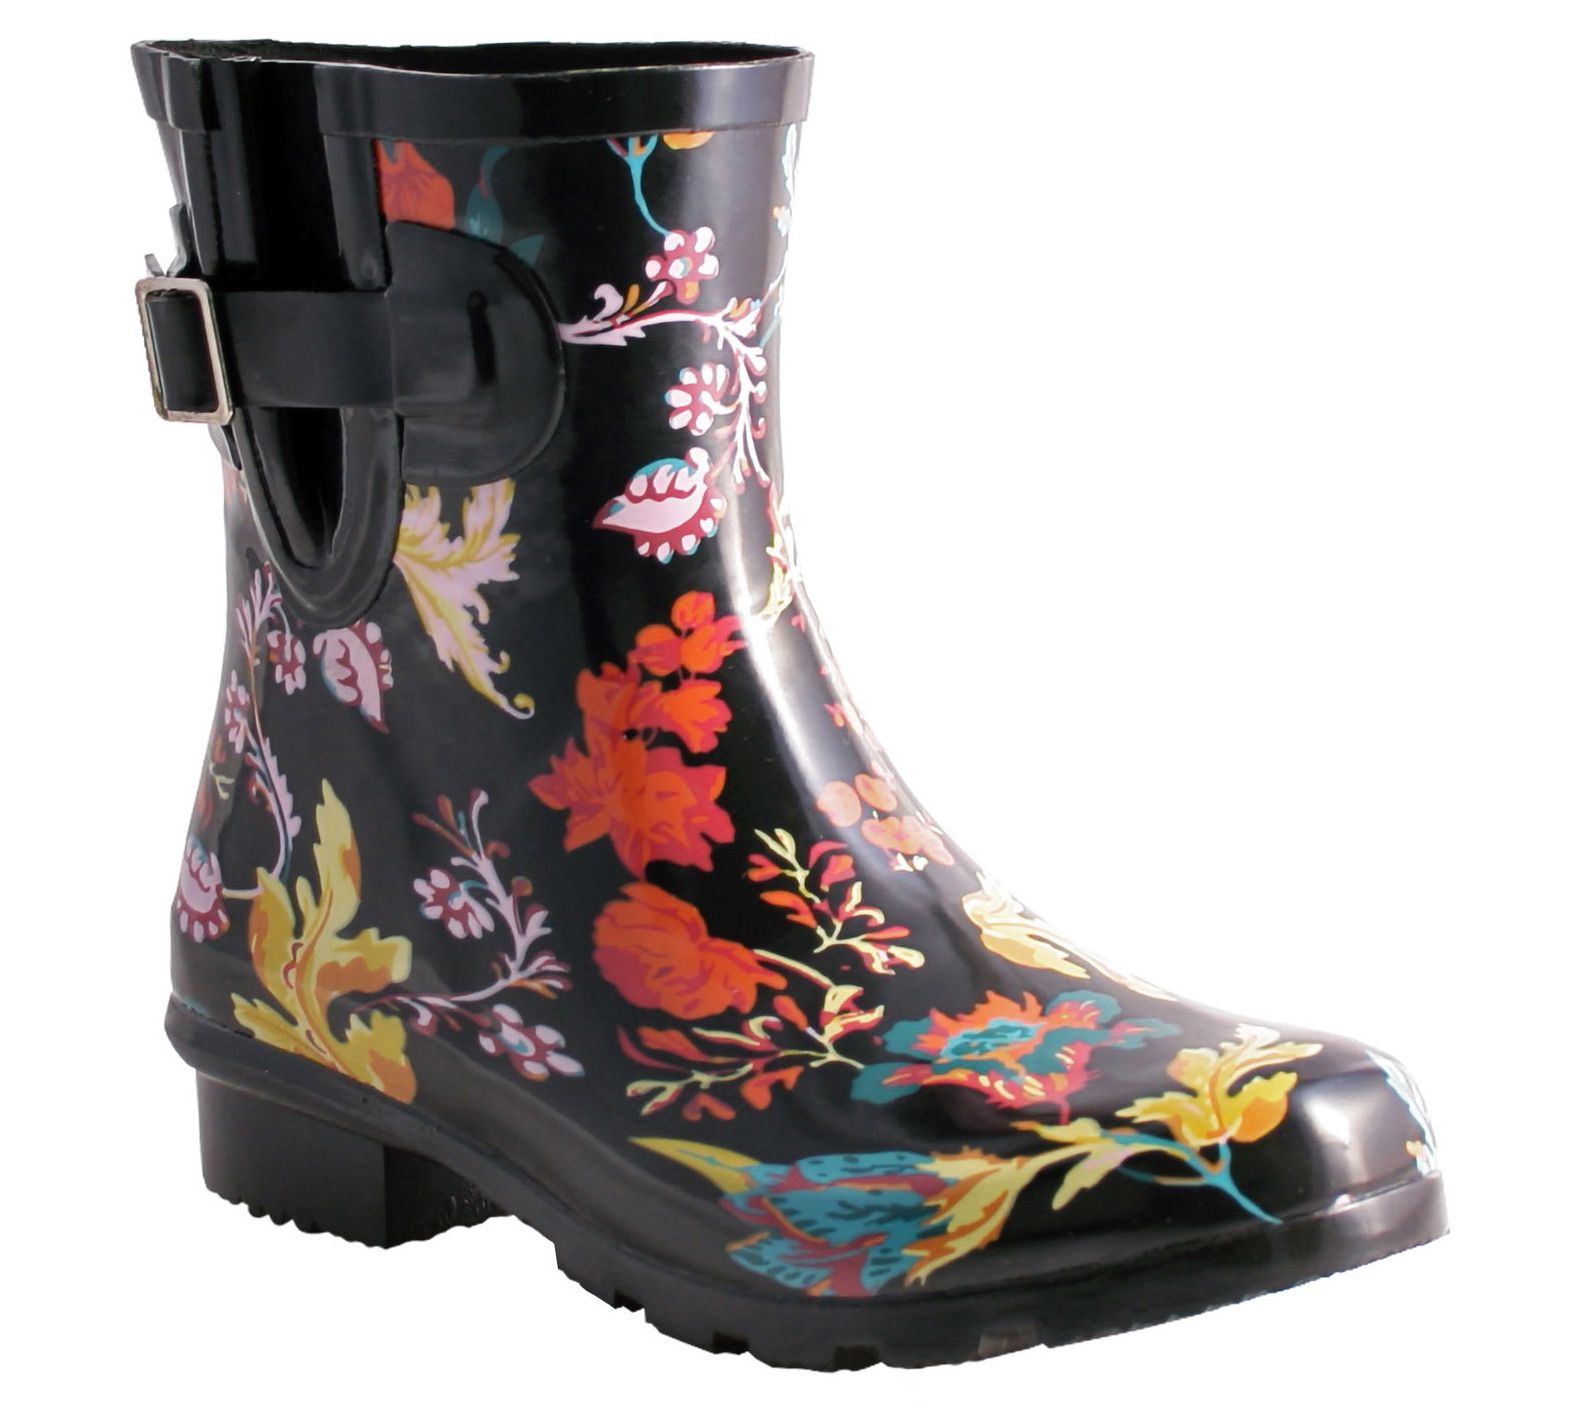  Nomad Women's Puddles Rain Boot, Pink/Mint Tile, 7 Medium US